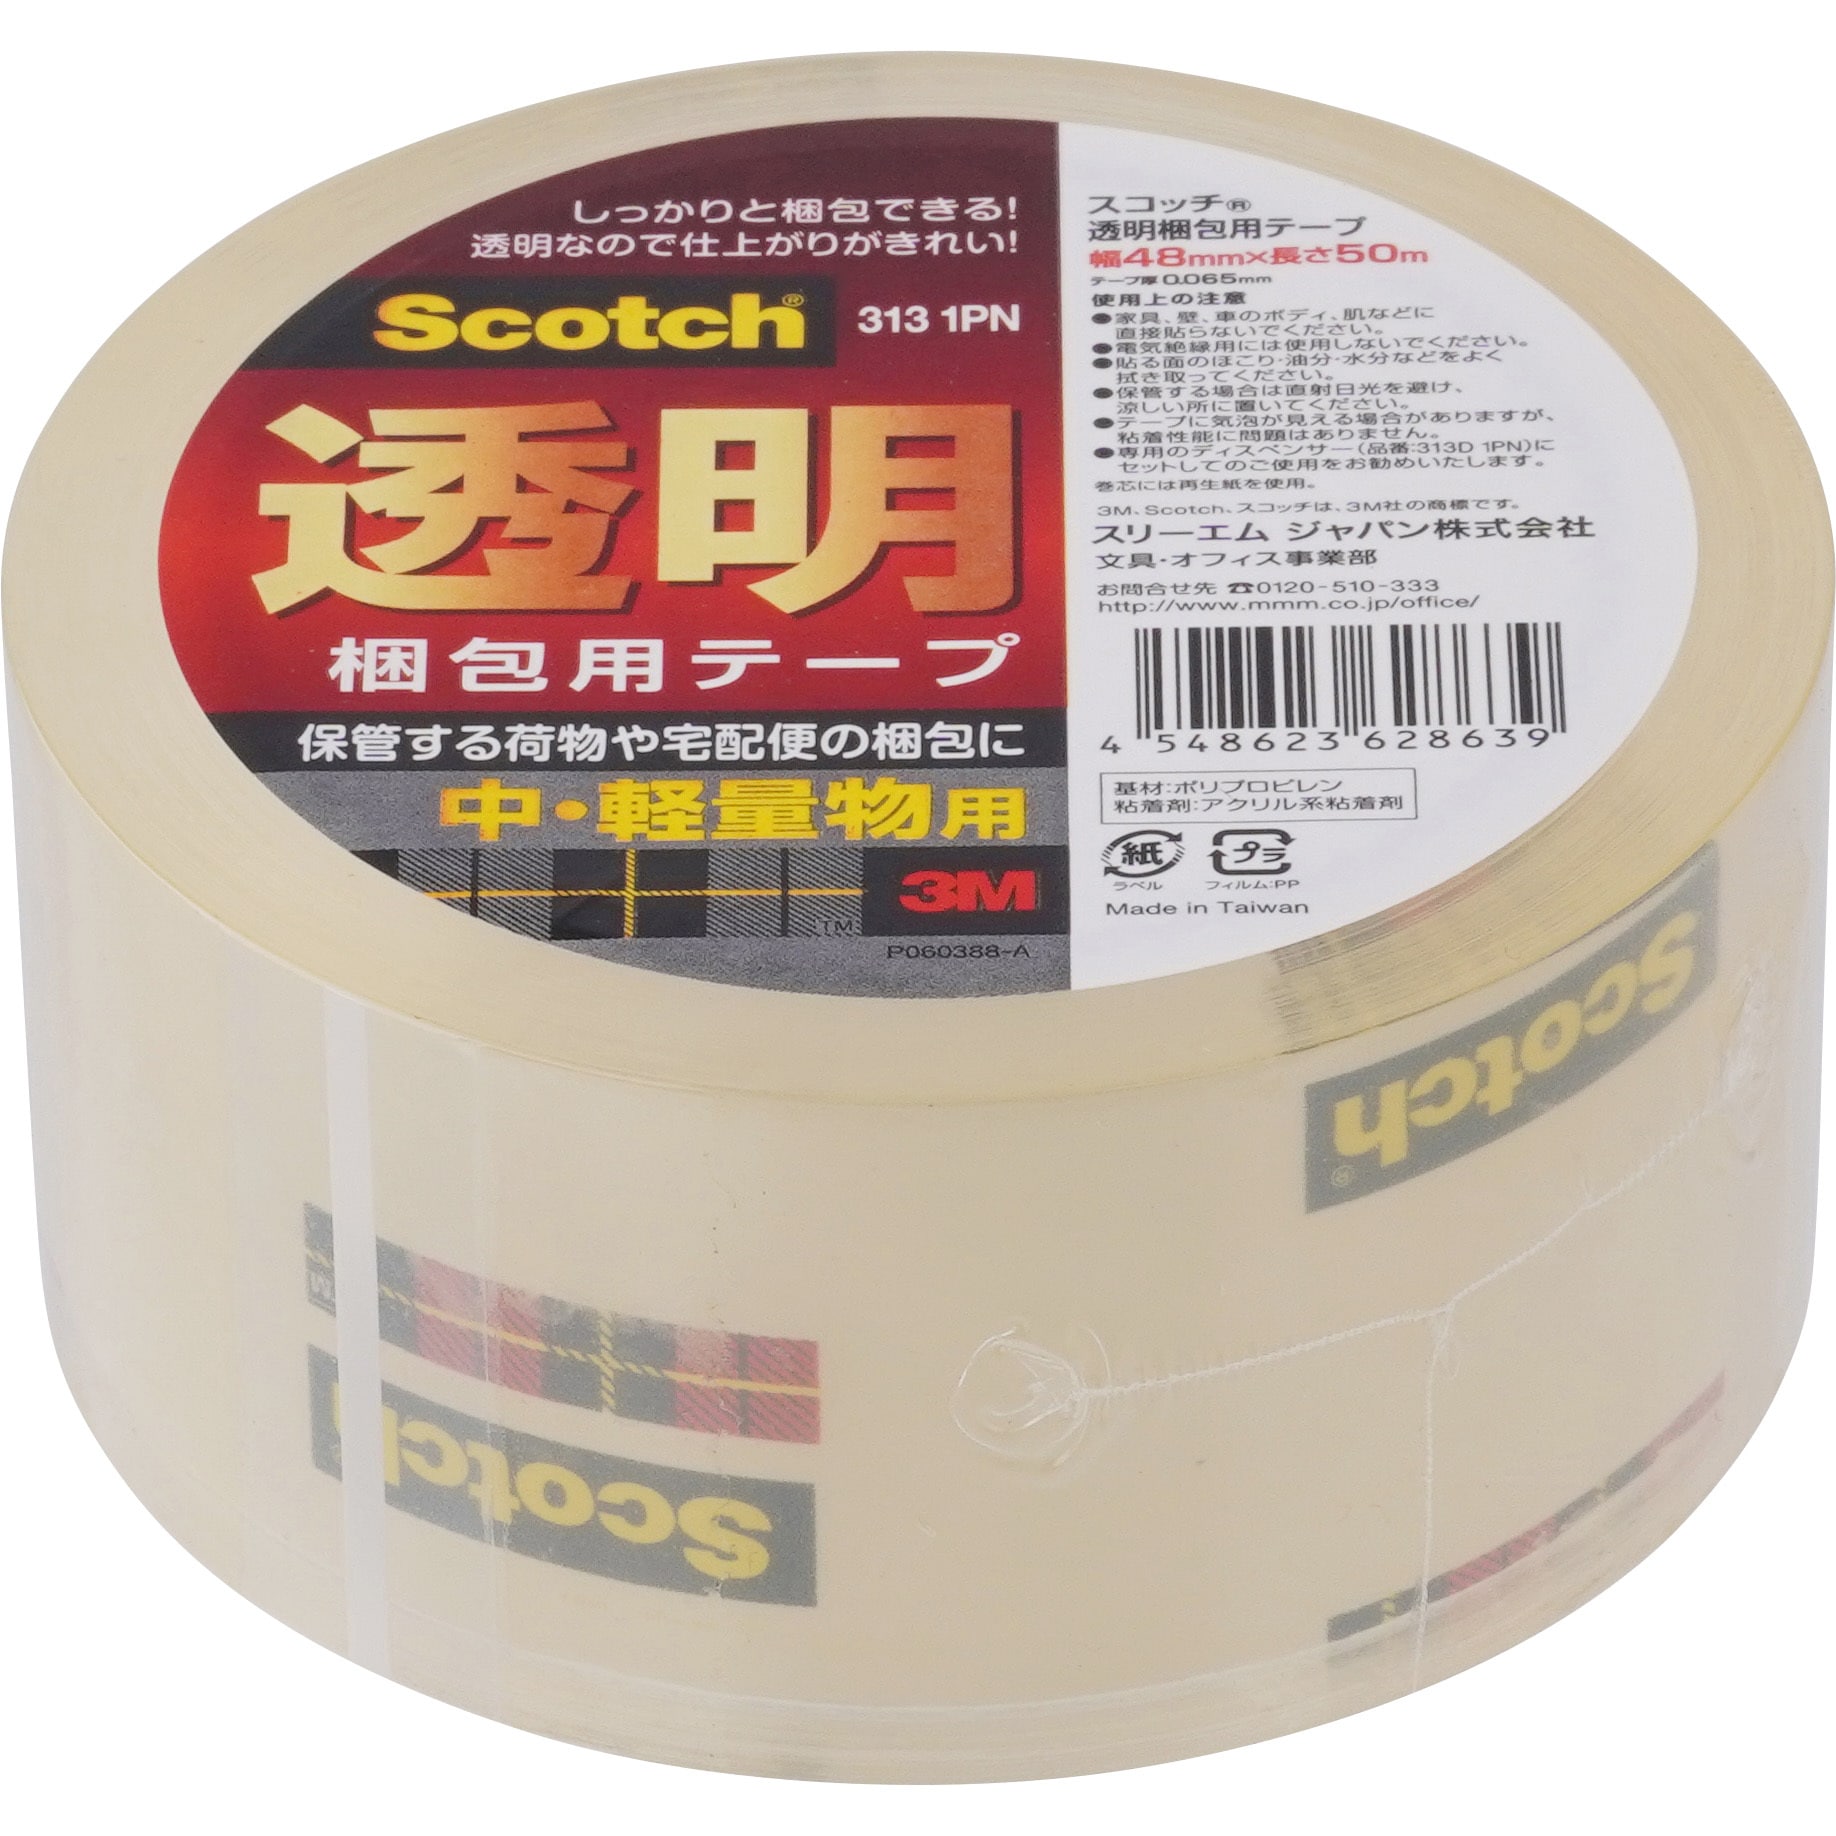 3M スコッチ 透明梱包用粘着テープ(313) 48mm×50m 1箱（50巻入）セット - 3